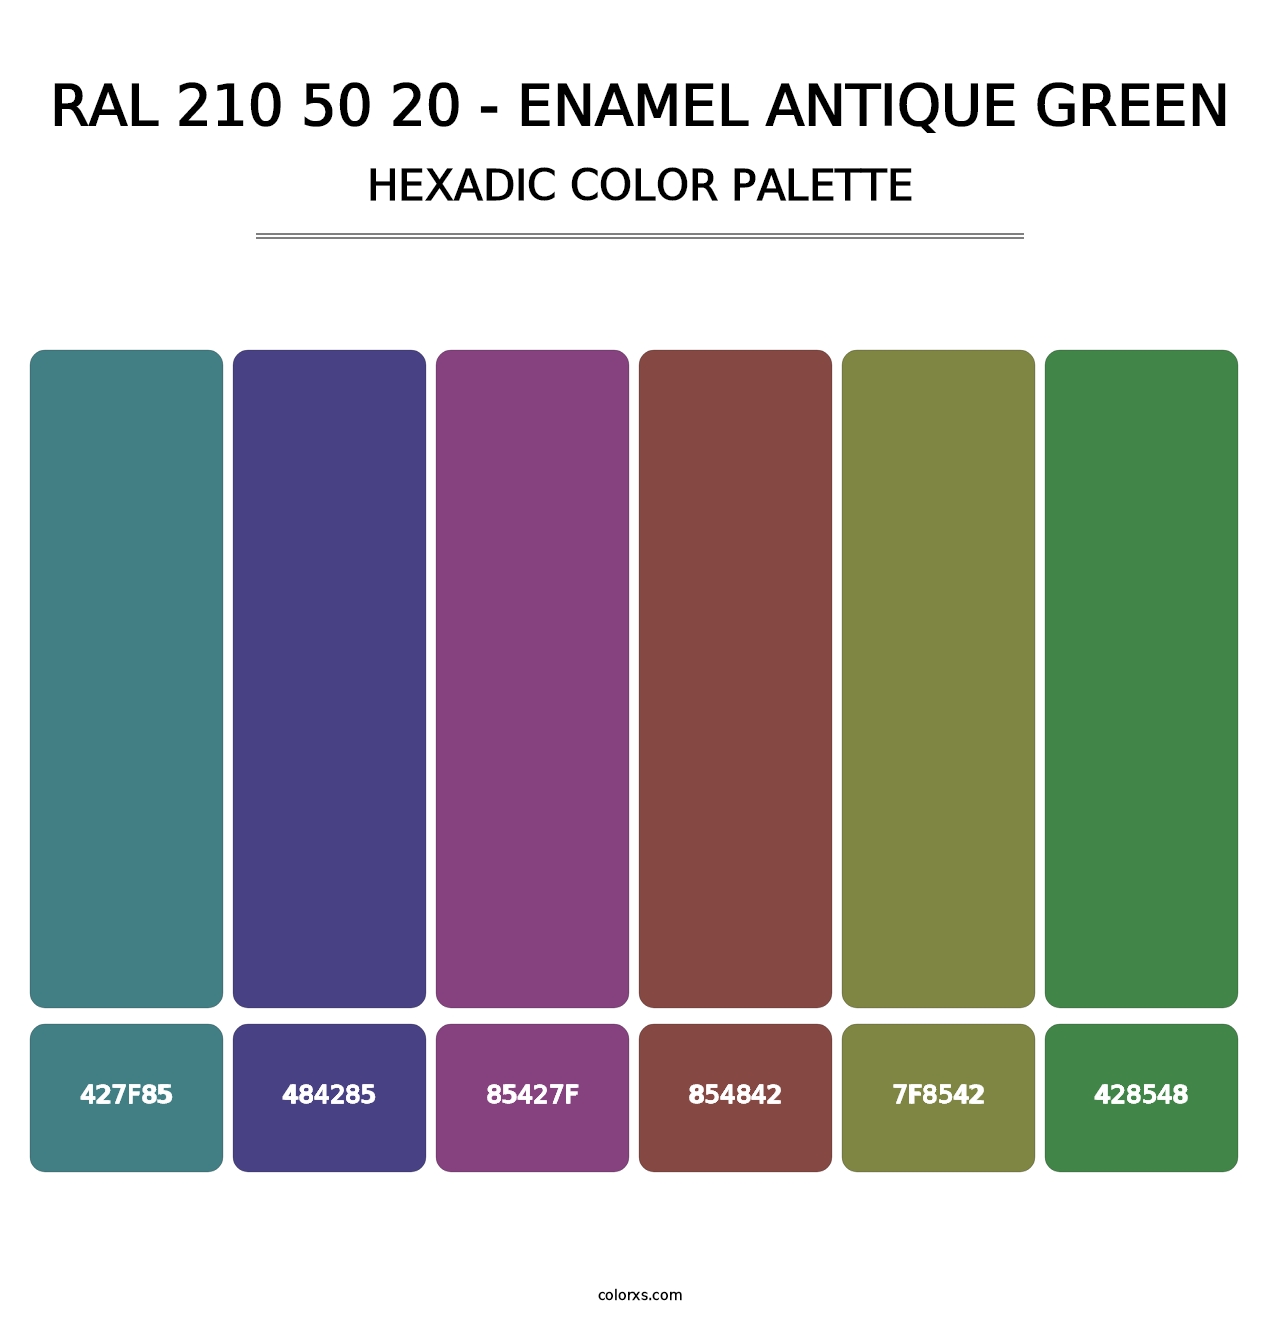 RAL 210 50 20 - Enamel Antique Green - Hexadic Color Palette